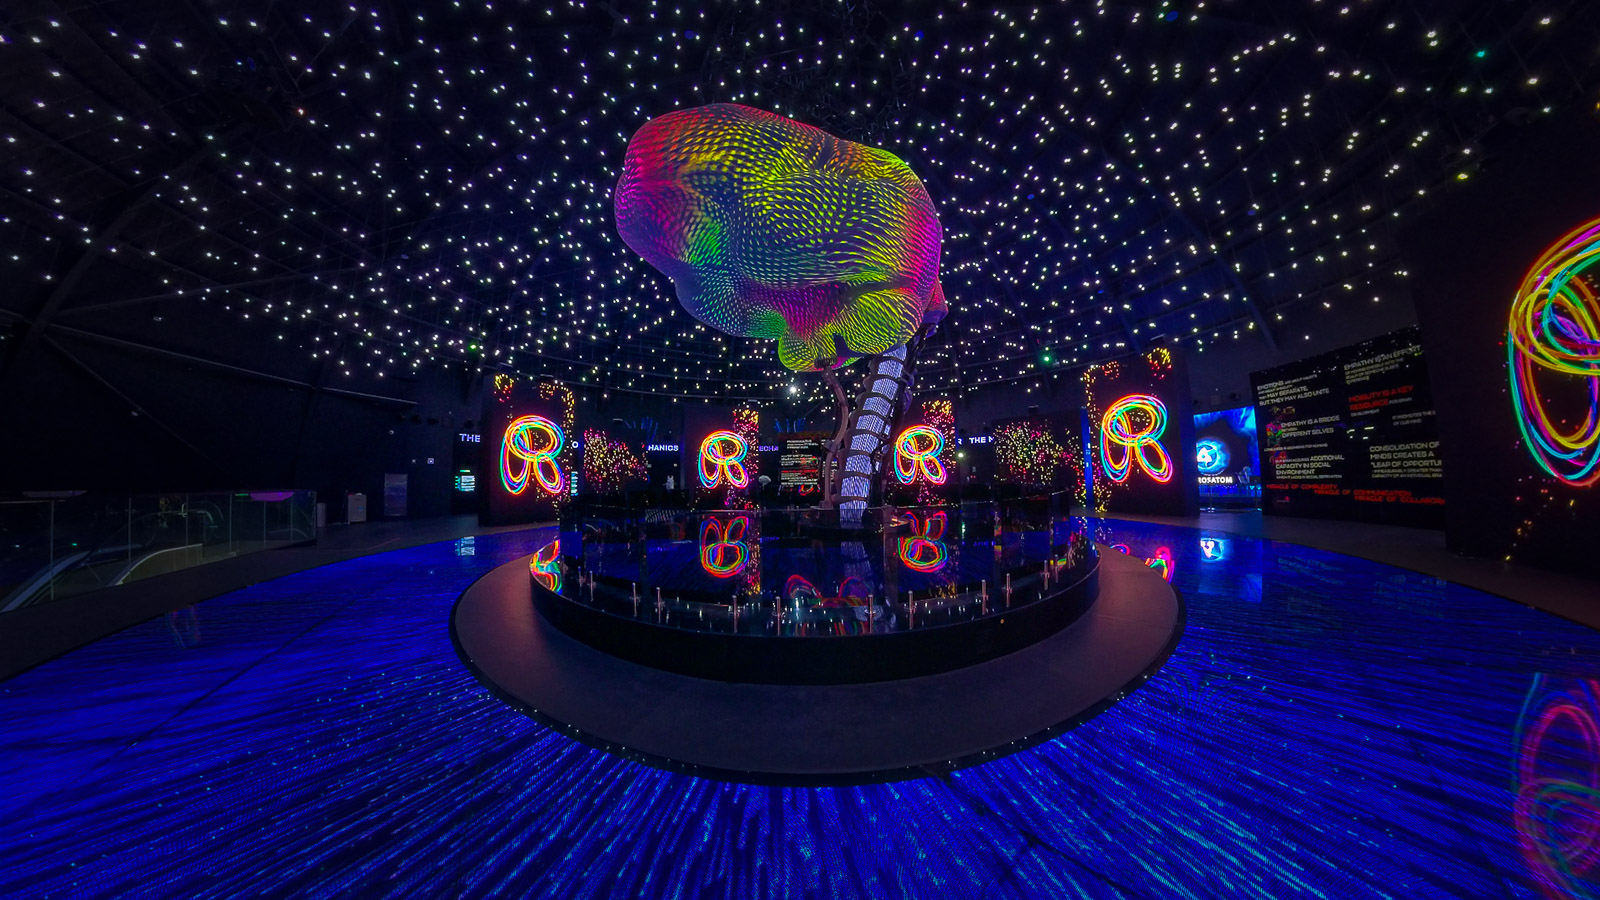 Virtual tour Russian Pavilion Expo 2020